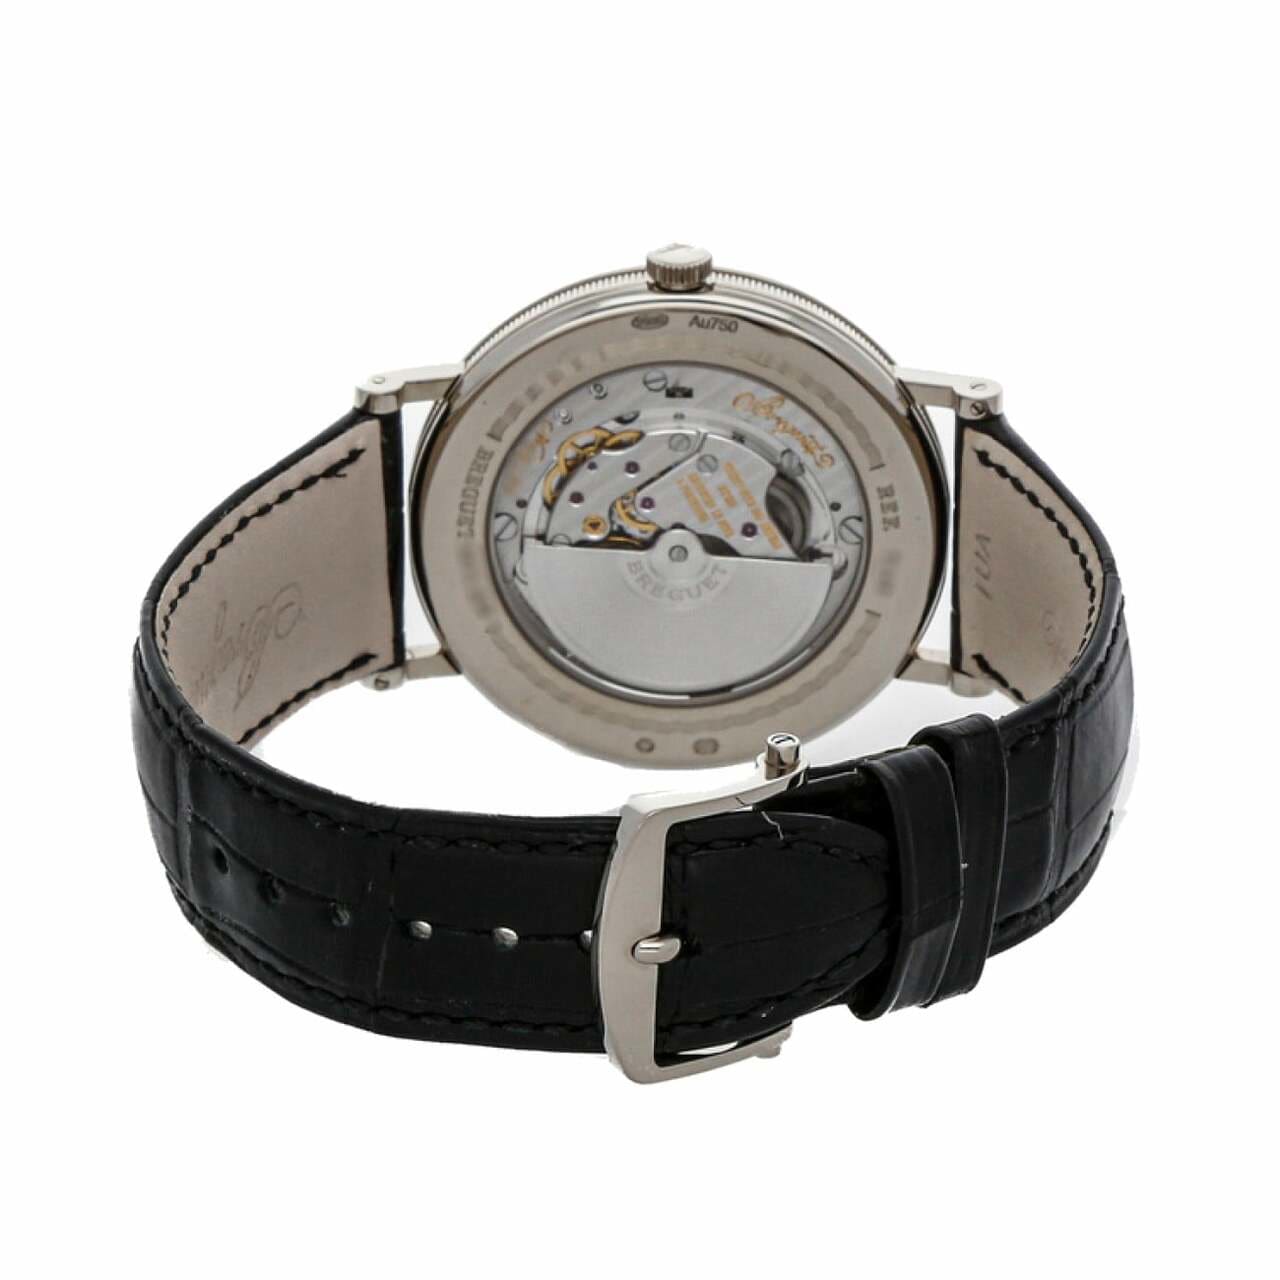 Breguet 7147BB299WU Classique White Dial Black Leather Men's White Gold Watch